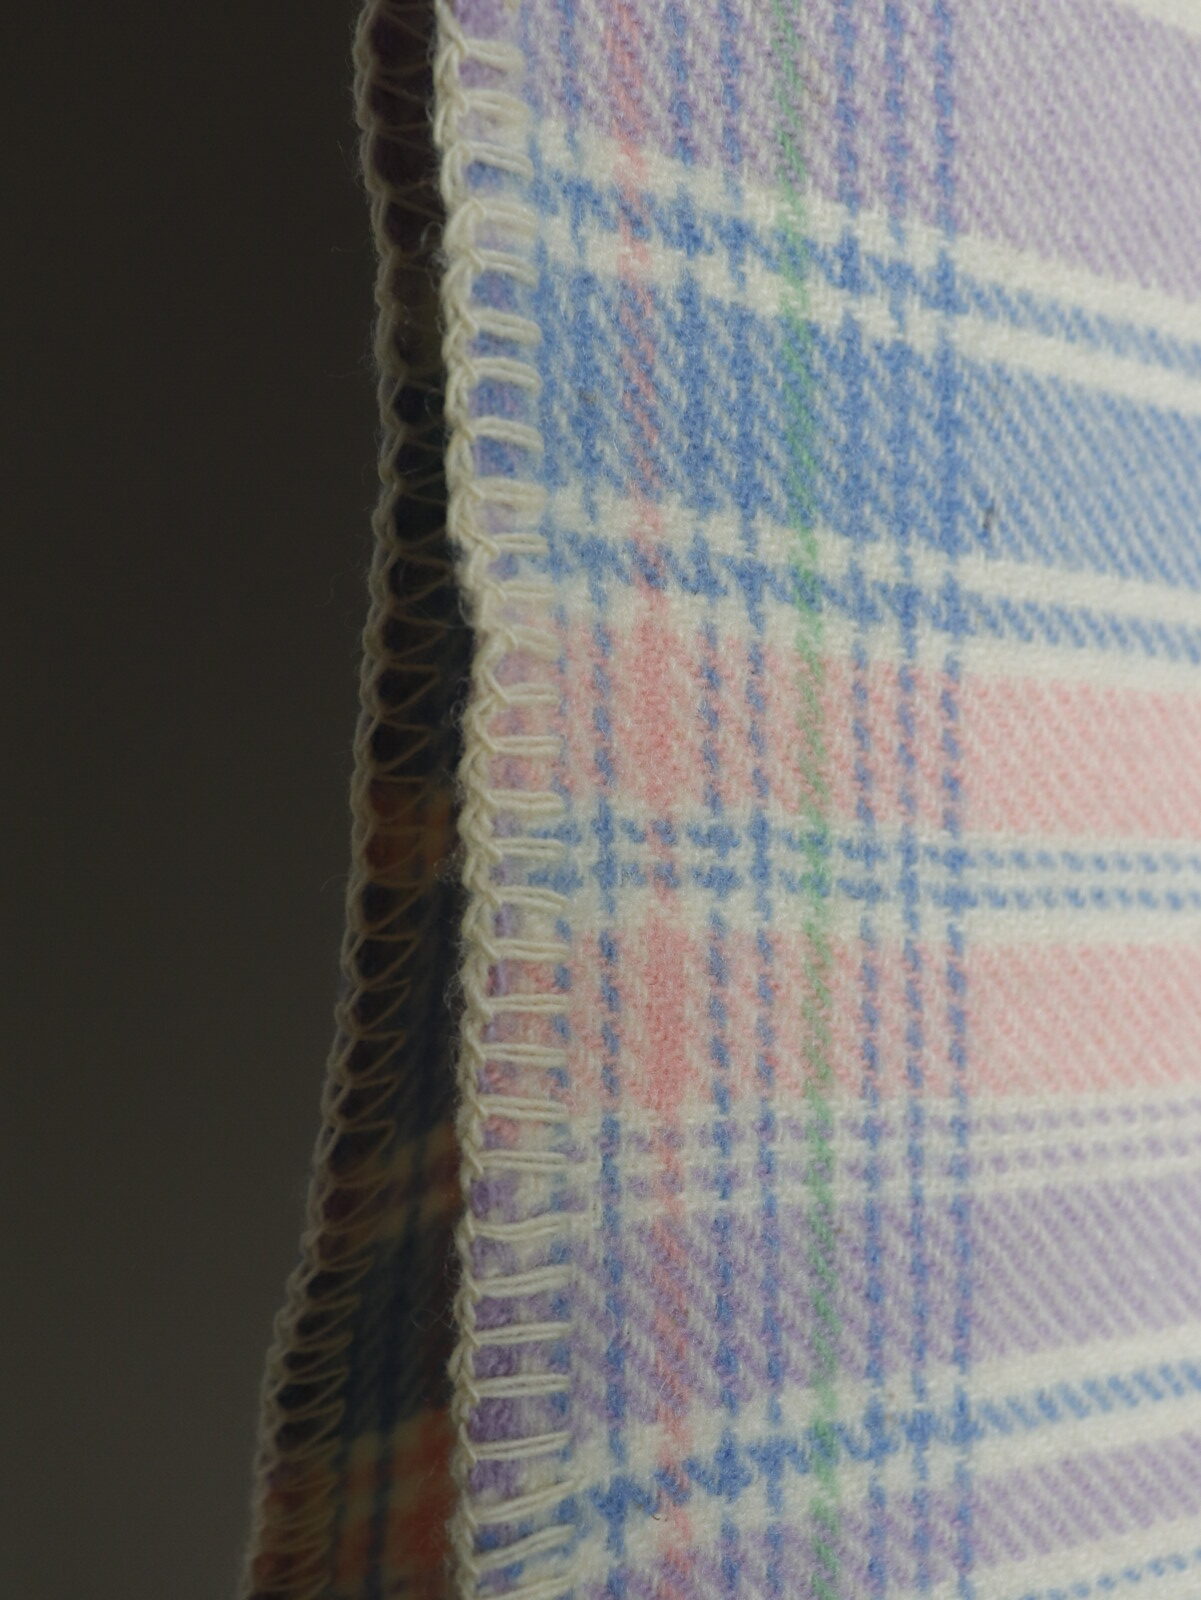 Ralph Lauren,wool blanket,USA,plaid blanket